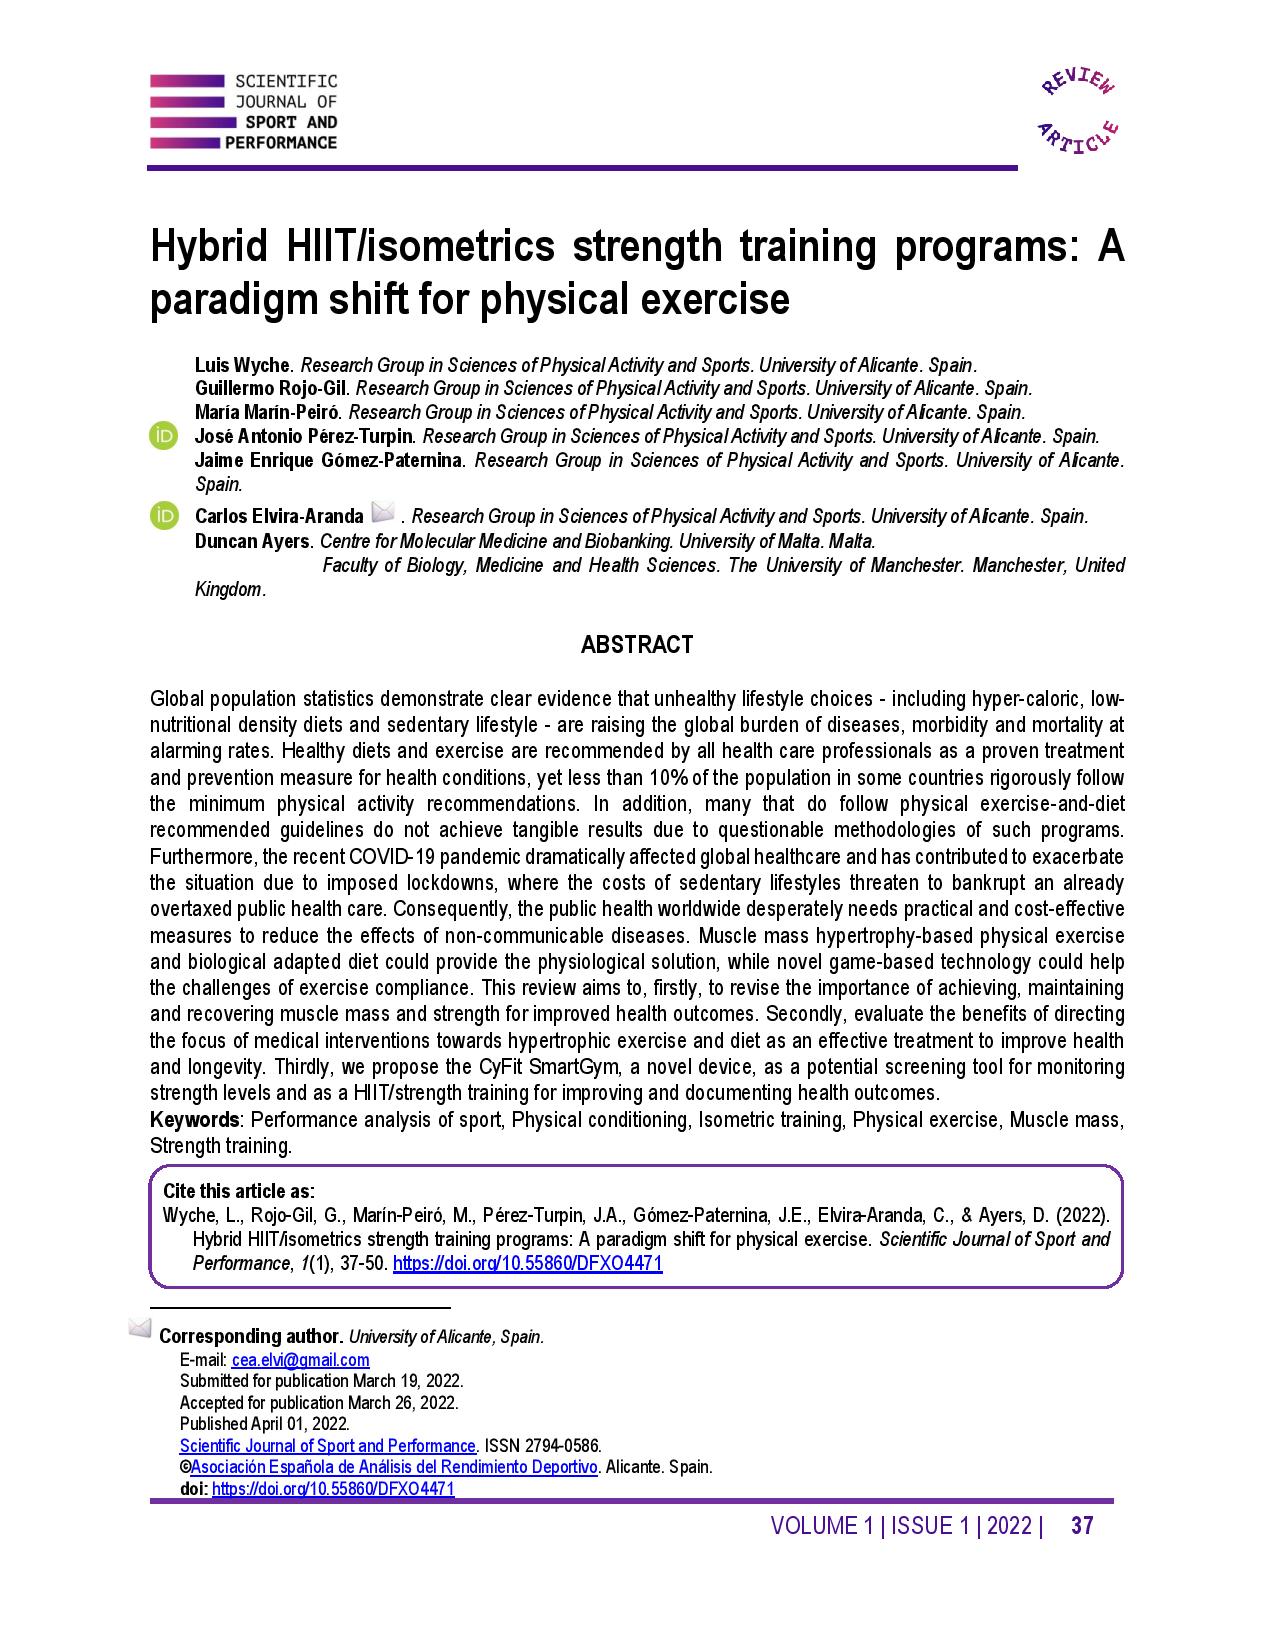 Hybrid HIIT/isometrics strength training programs: A paradigm shift for physical exercise